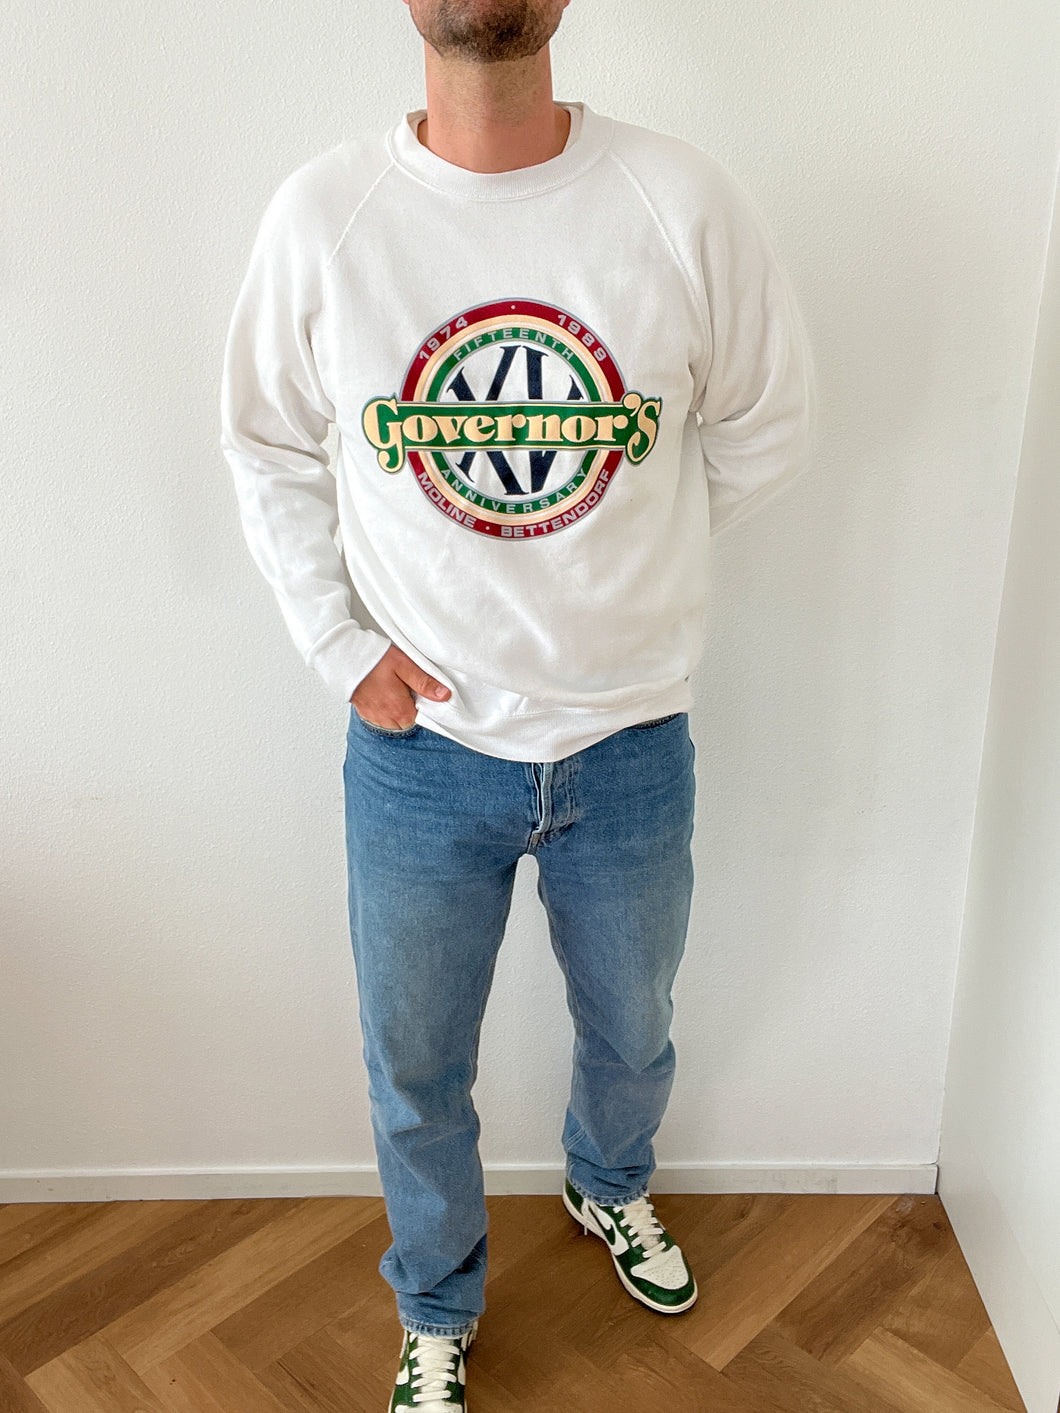 Green/White Vintage Governor USA varsity sweatshirt size L